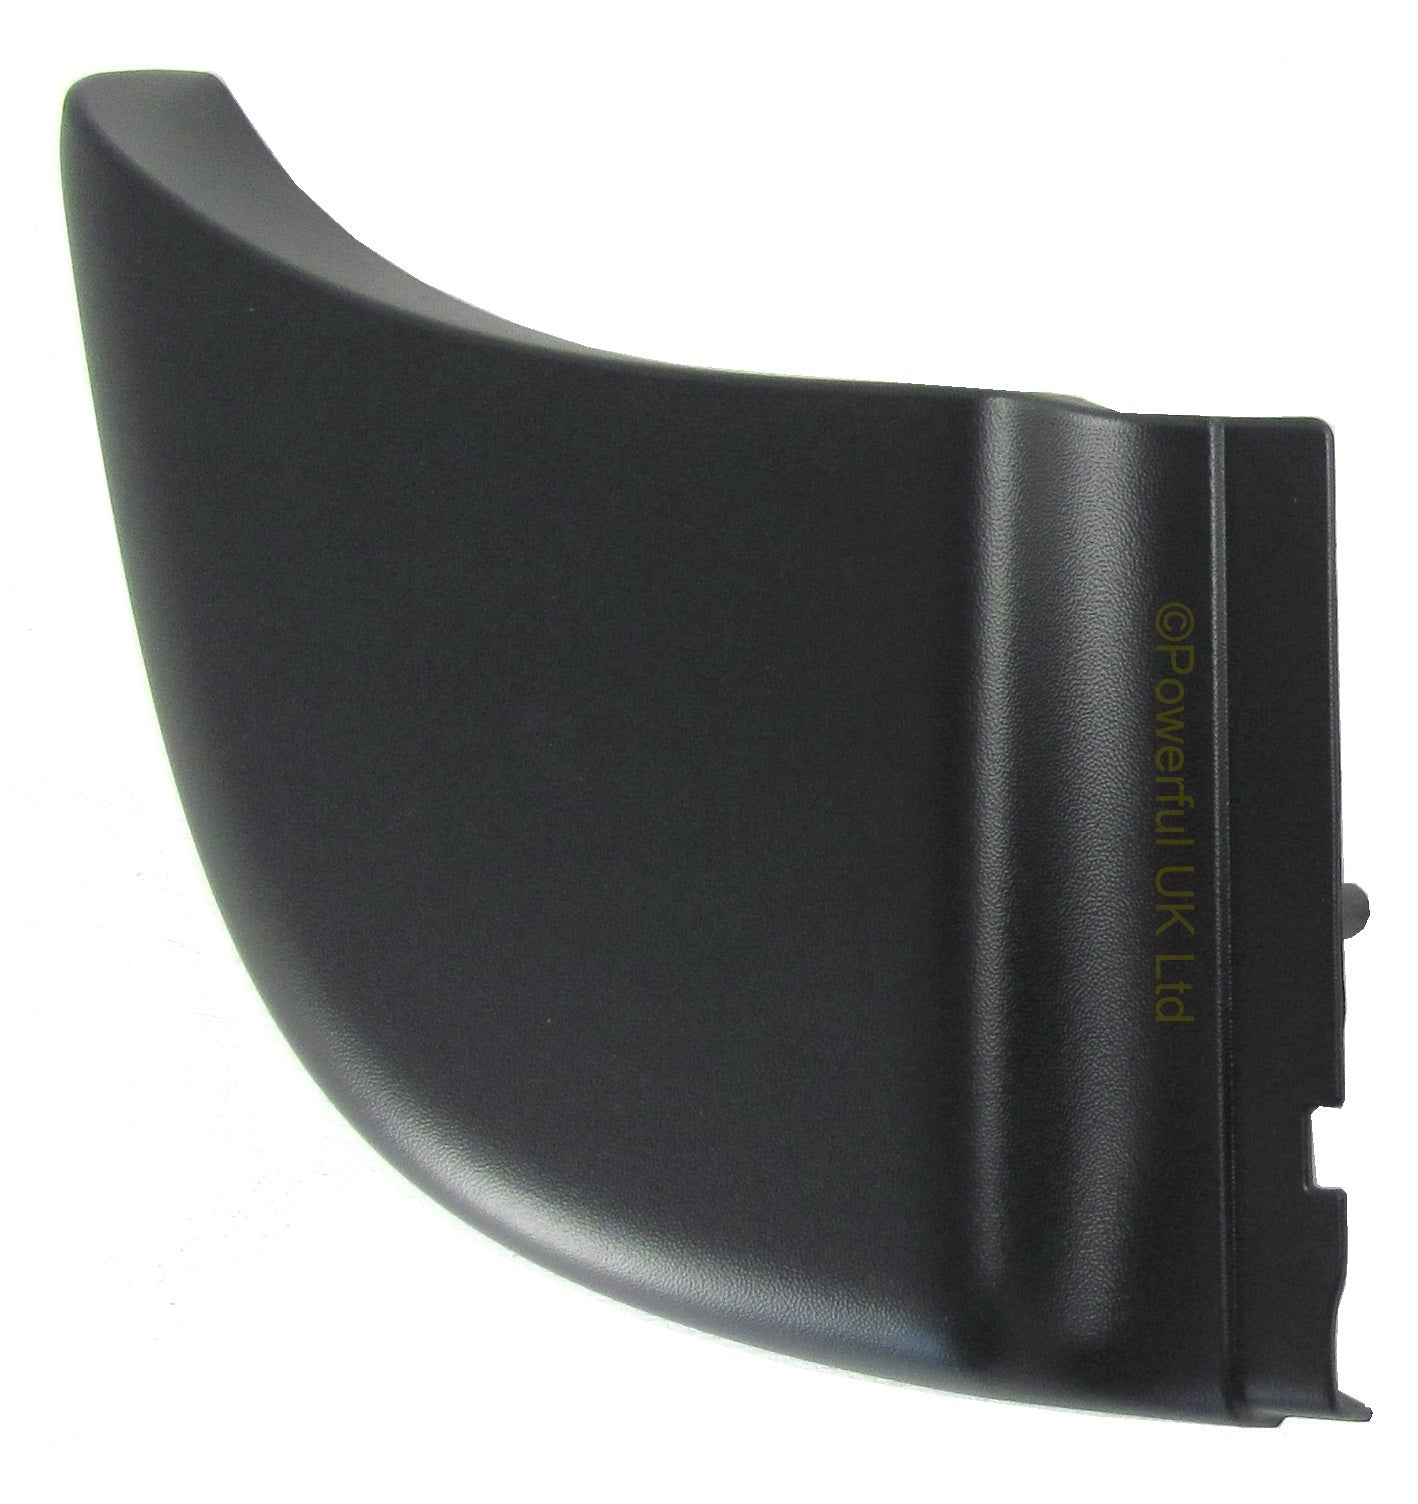 Rear Bumper Plastic End Cap - OE - Left Hand - for Toyota Hilux Mk6 / Mk7 & Vigo